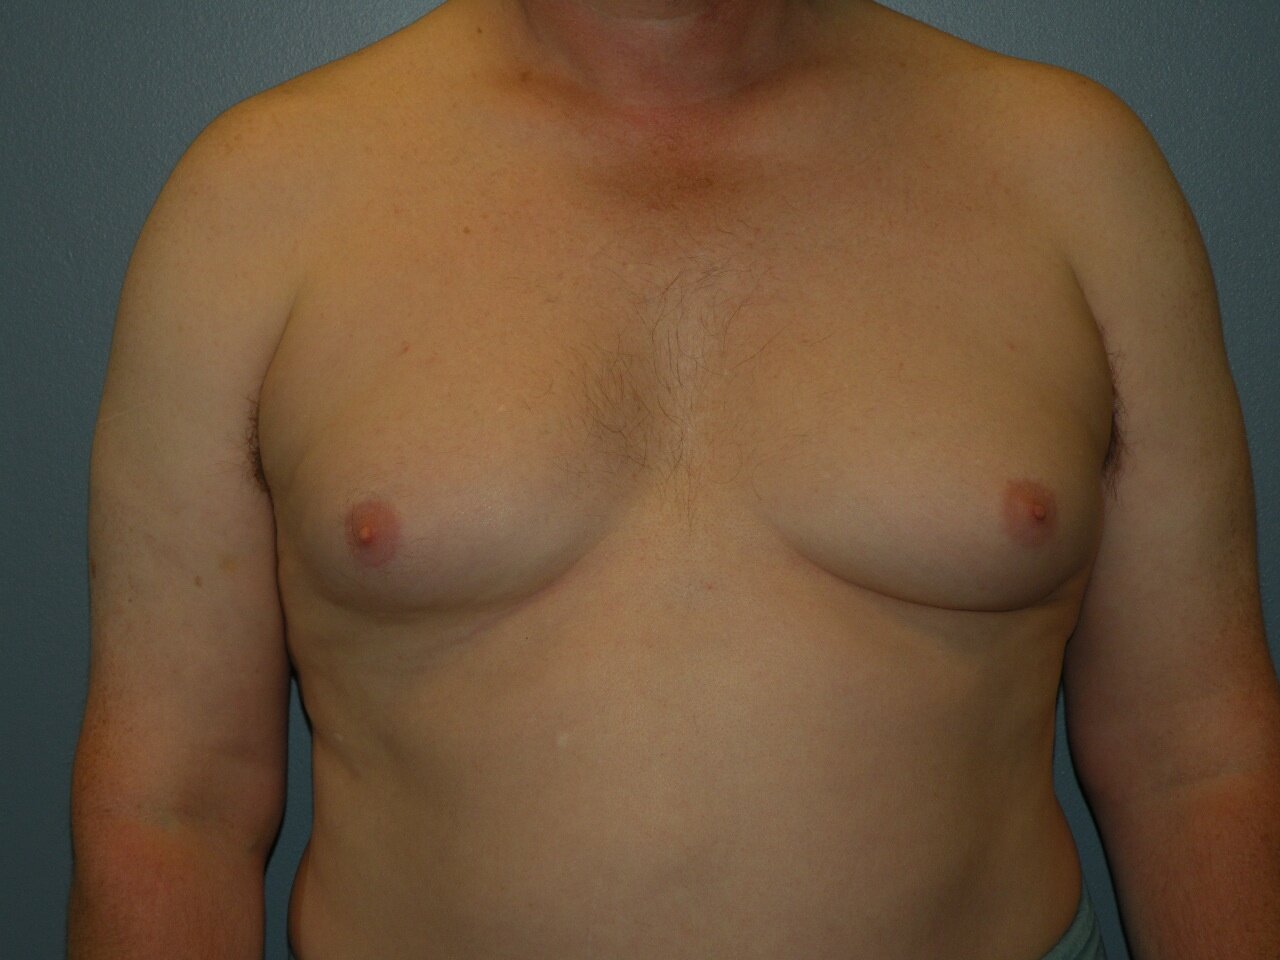 Patient A - Grade IIA Gynecomastia - full female size breast with no excess  skin. — Dr Giuffre Plastic Surgeon Edmonton